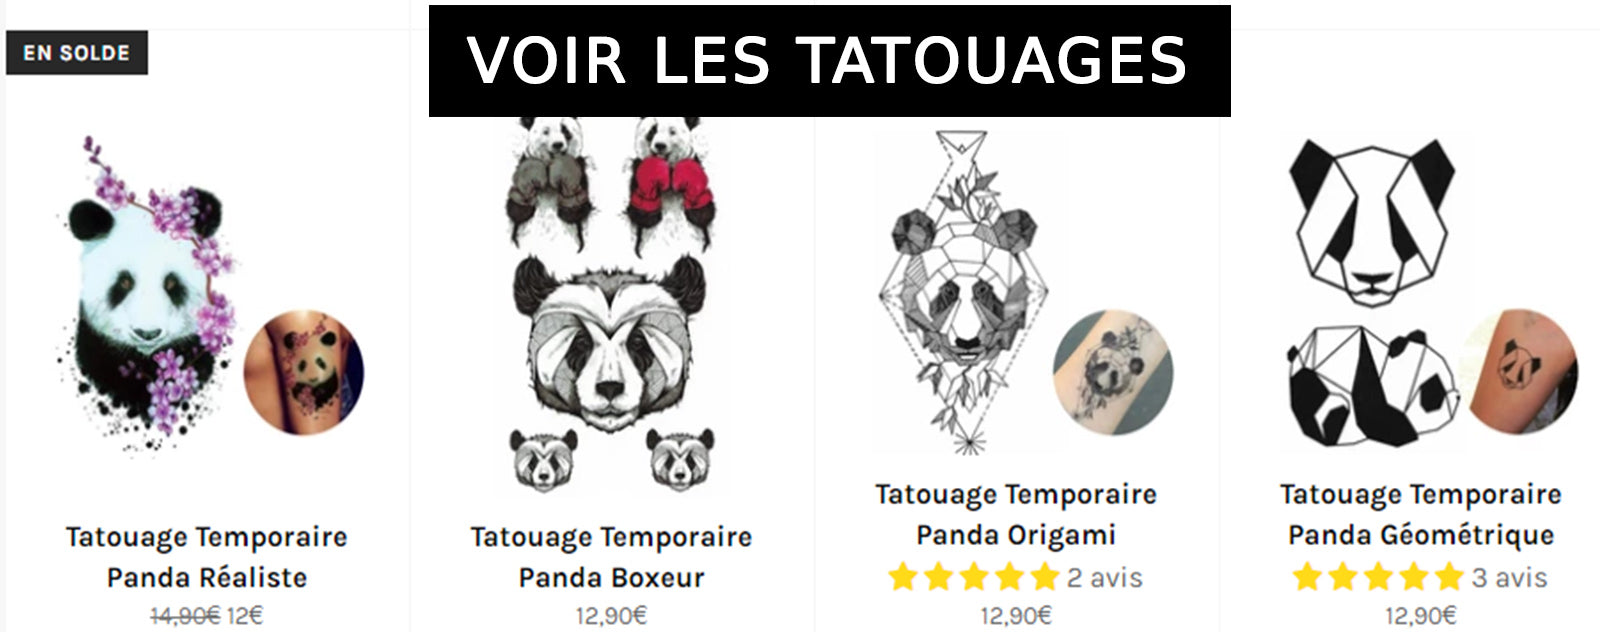 Tatouage Panda Temporaire Gallery